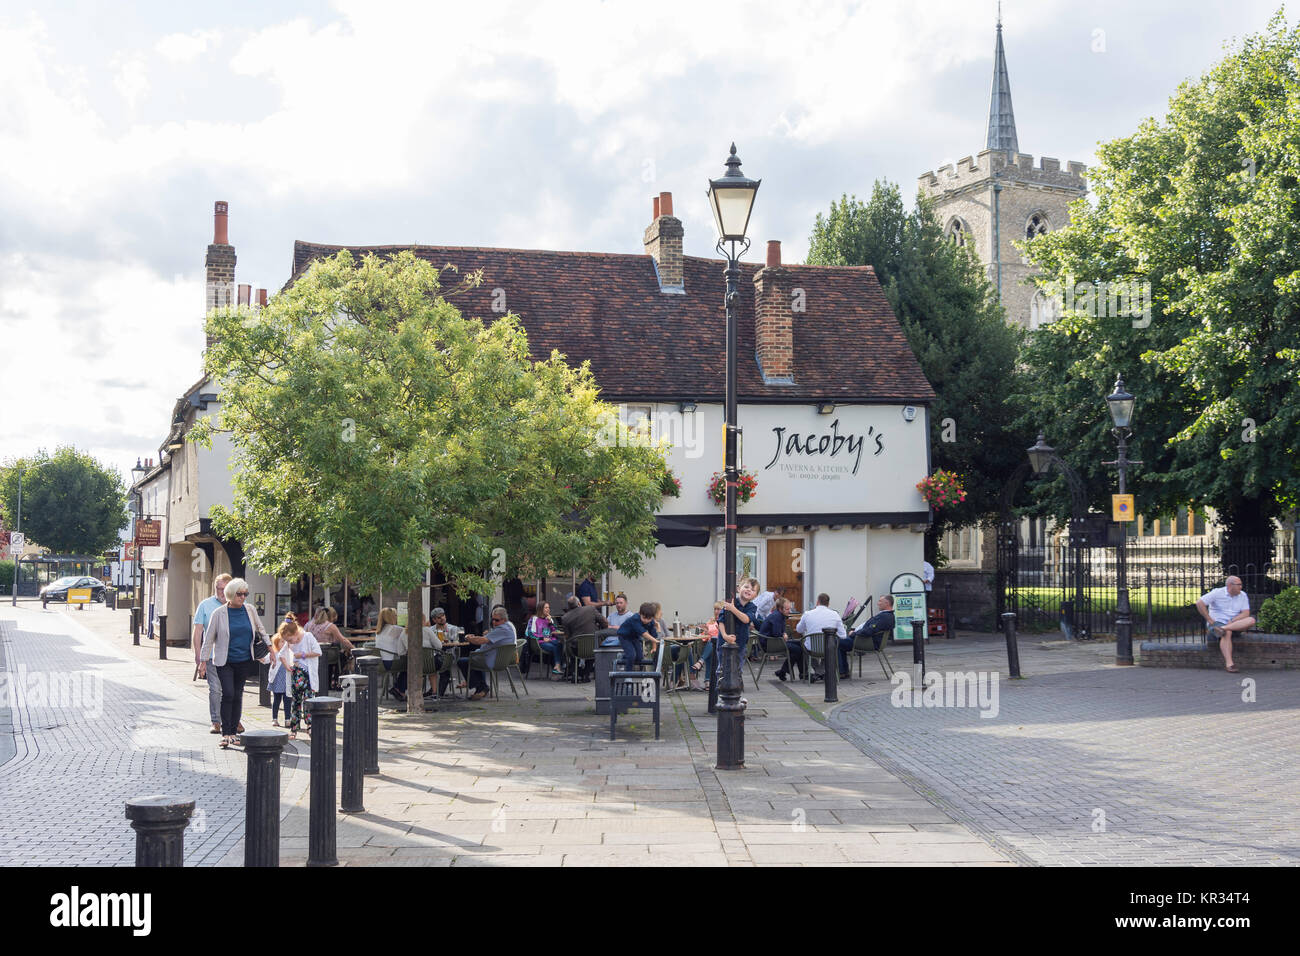 Jacoby's Restaurant and St.Mary's Church, Tudor Square, Ware, Hertfordshire, England, United Kingdom Stock Photo